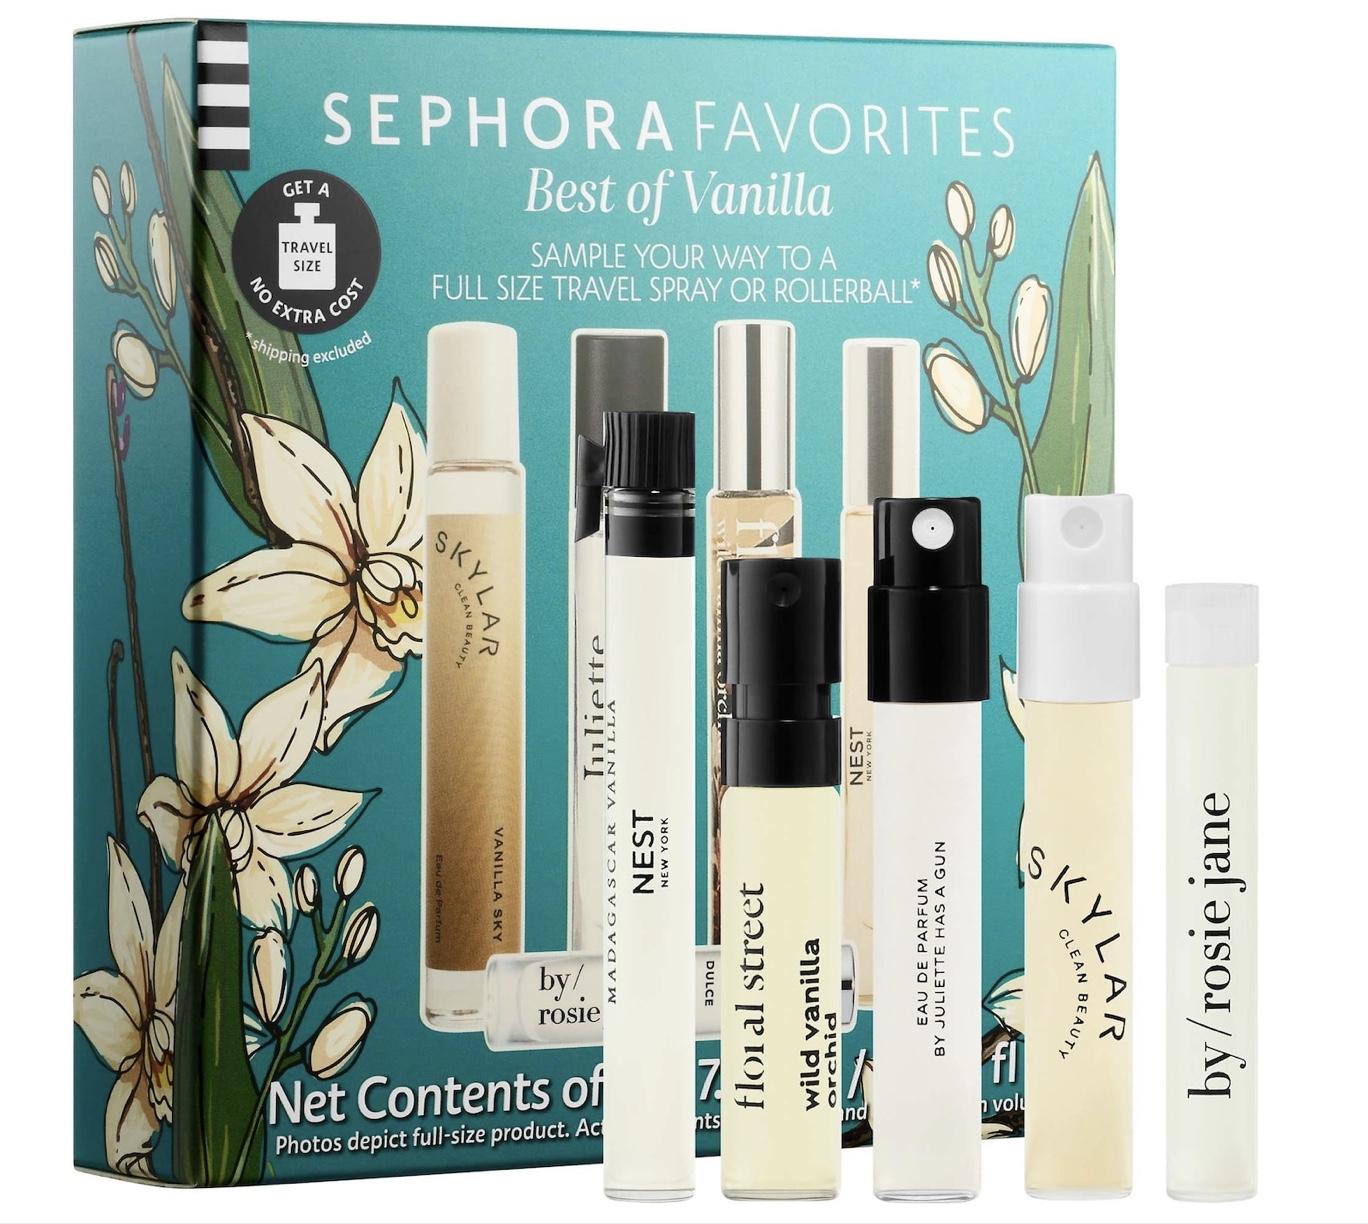 Sephora Favorites Sephora Favorites Vanilla Travel Perfume Sampler Set – Now Available